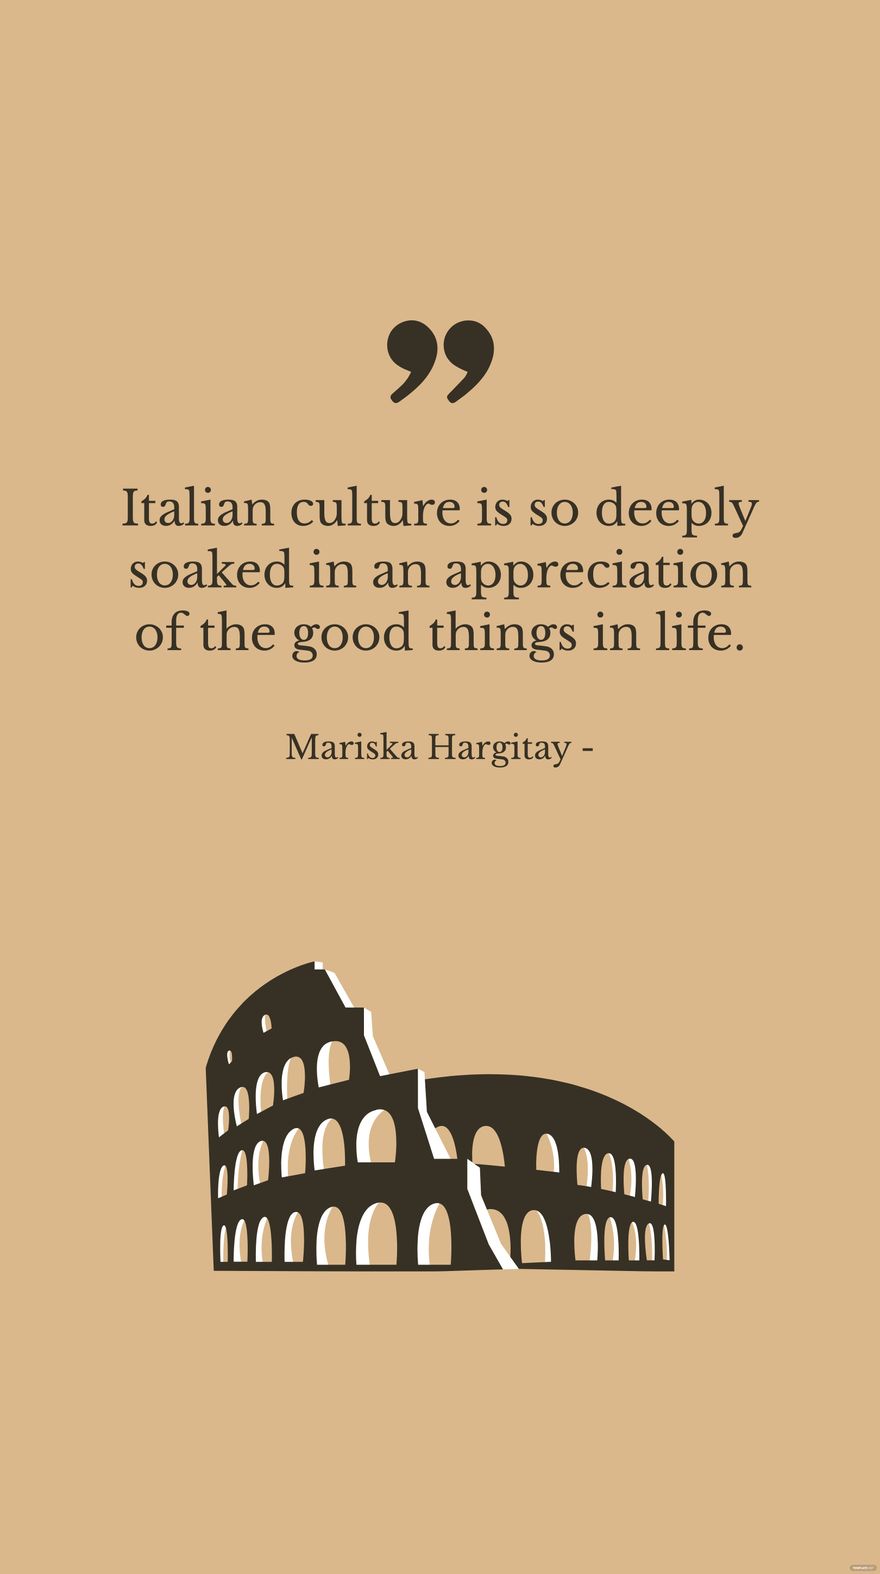 Mariska Hargitay - Italian culture is so deeply soaked in an appreciation of the good things in life. in JPG